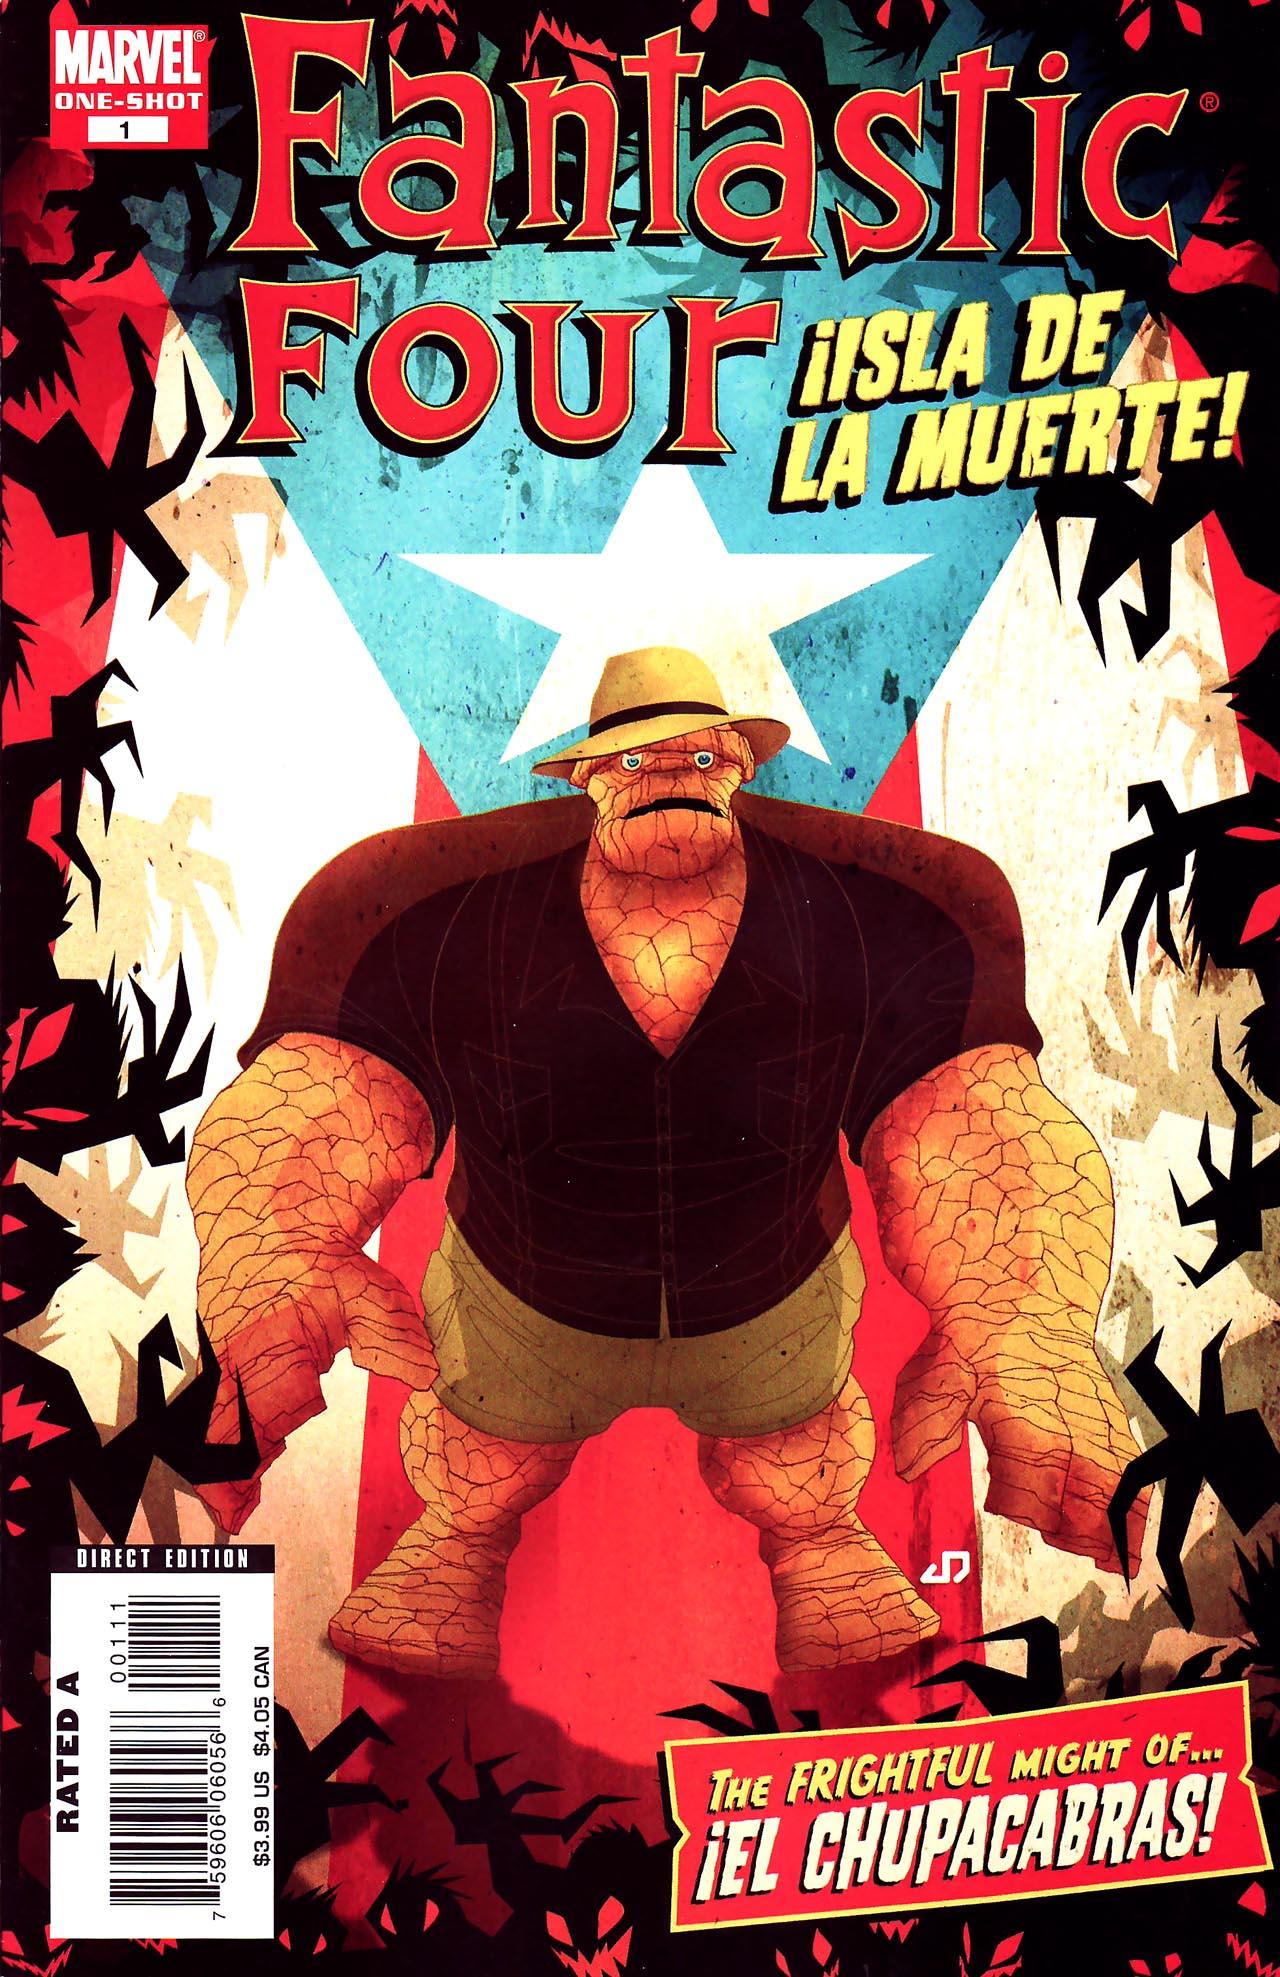 Fantastic Four: Isla De La Muerte! Vol. 1 #1